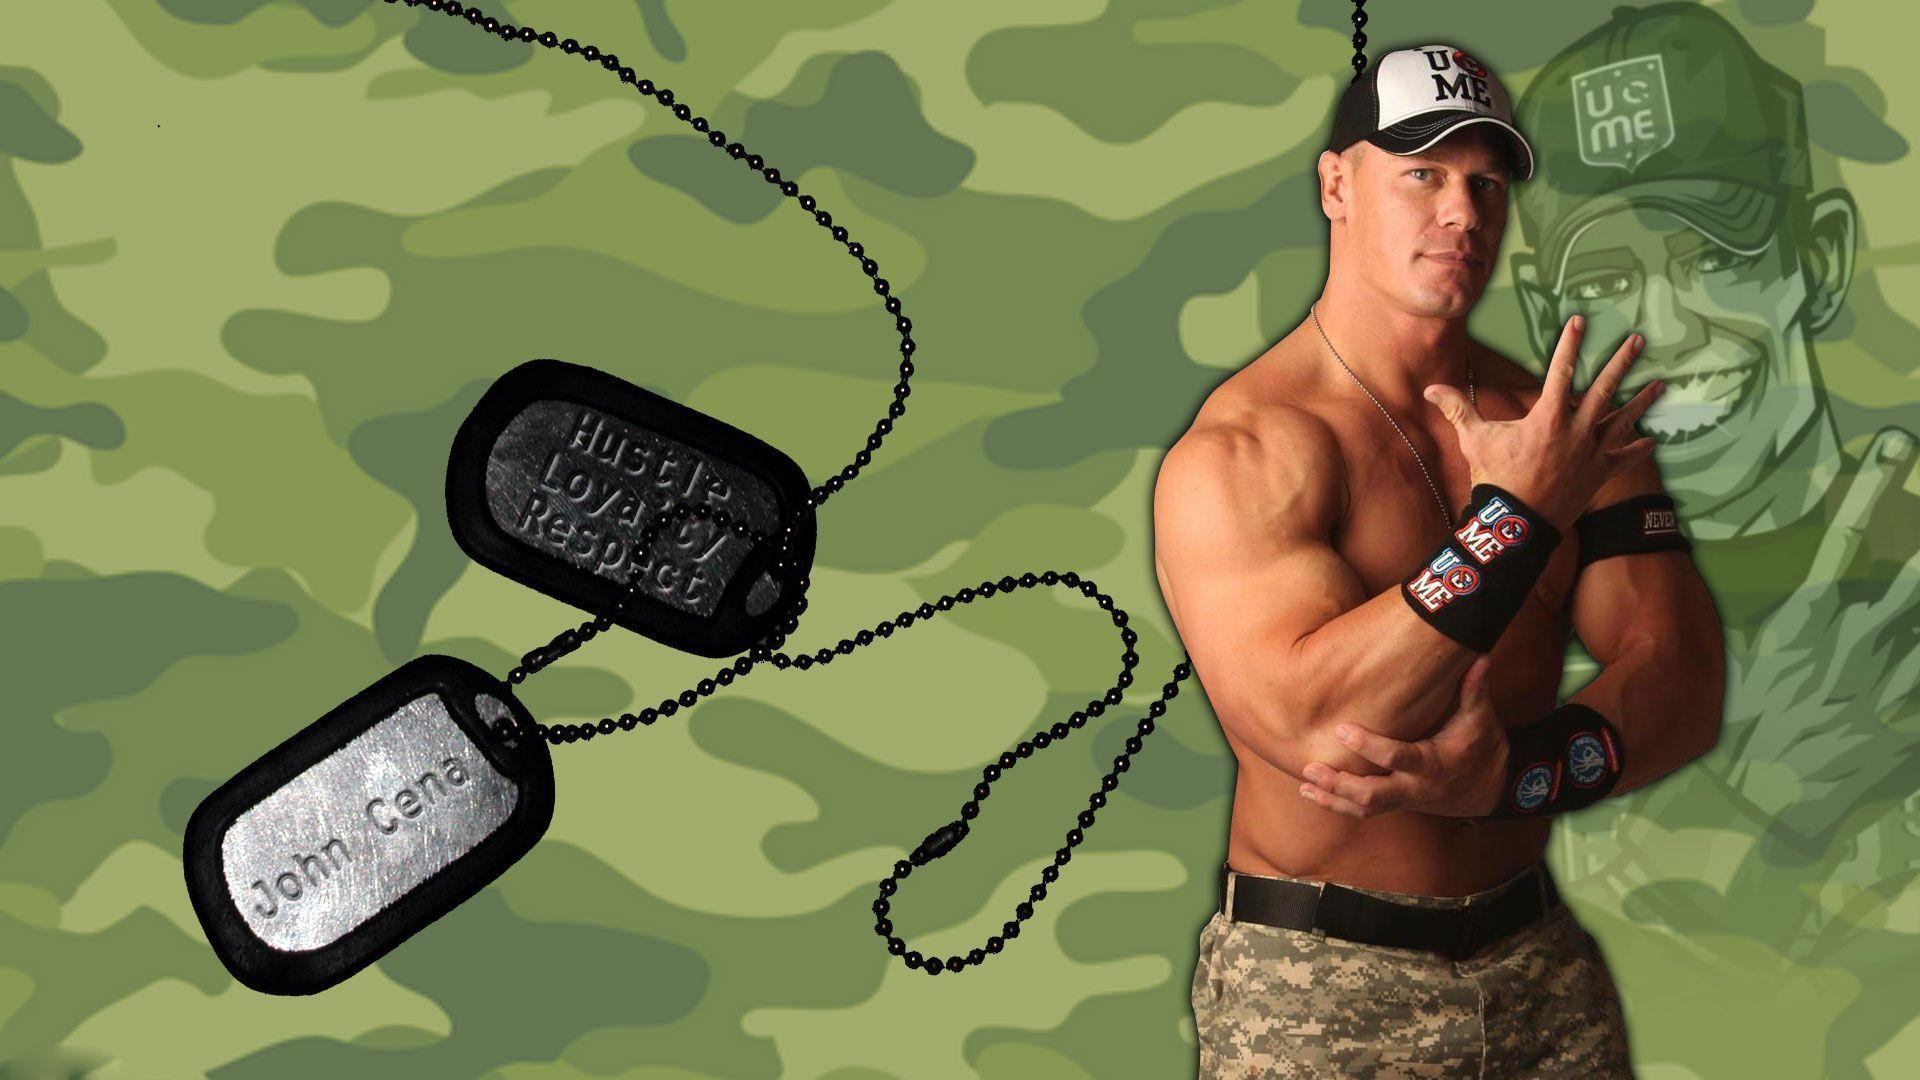 John Cena Background. Wallpaper, Background, Image, Art Photo